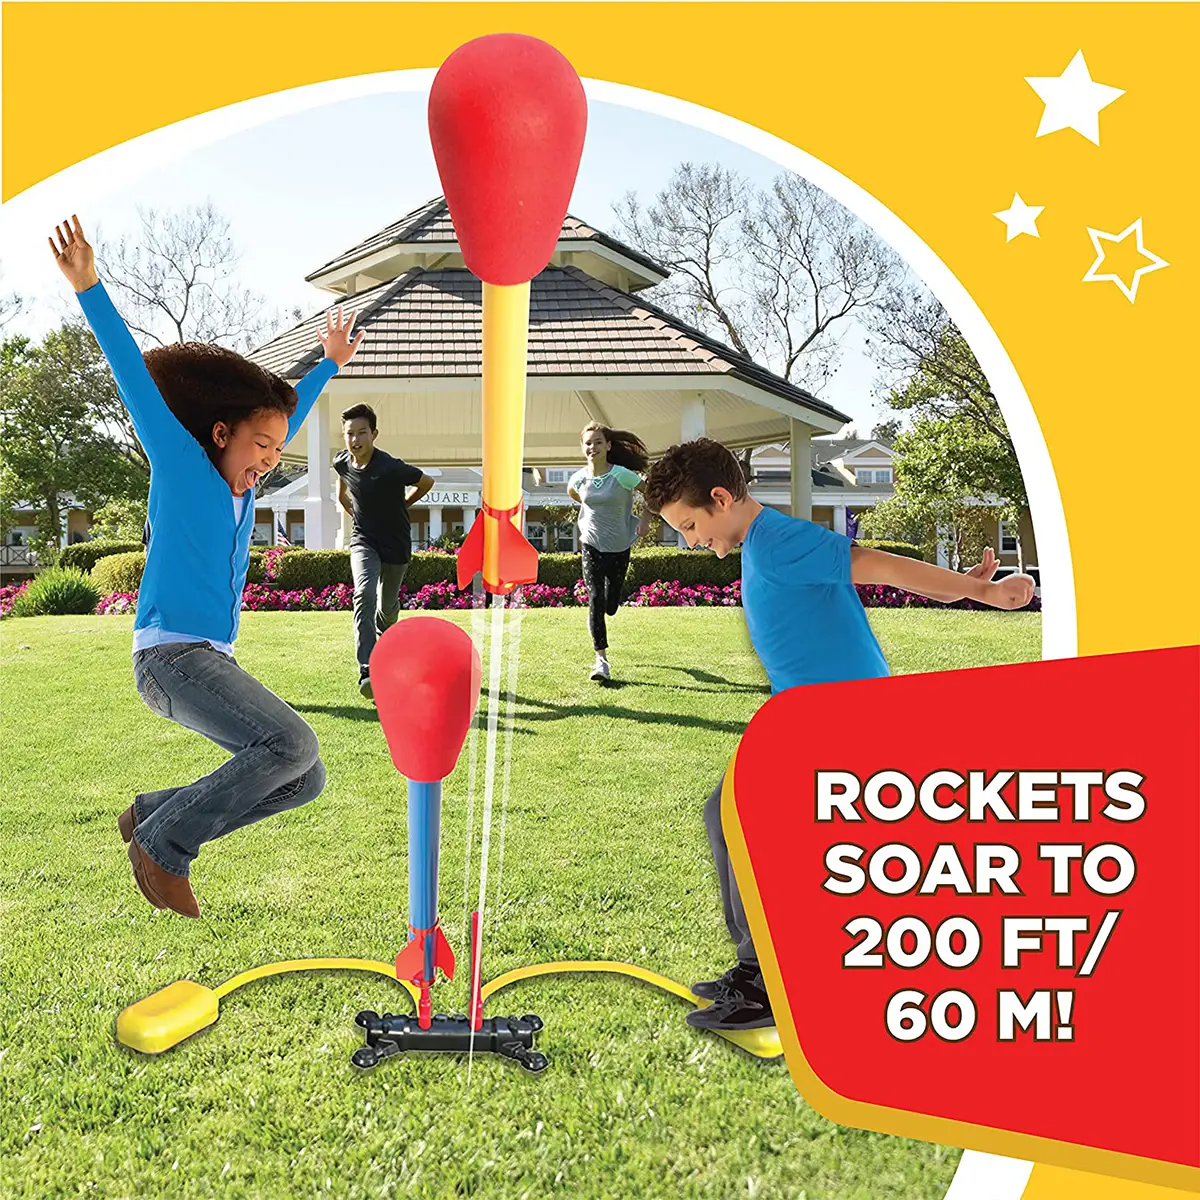 Stomp Rocket Original Dueling Rocket Launcher For Kids of Age 5Y+, Multicolour